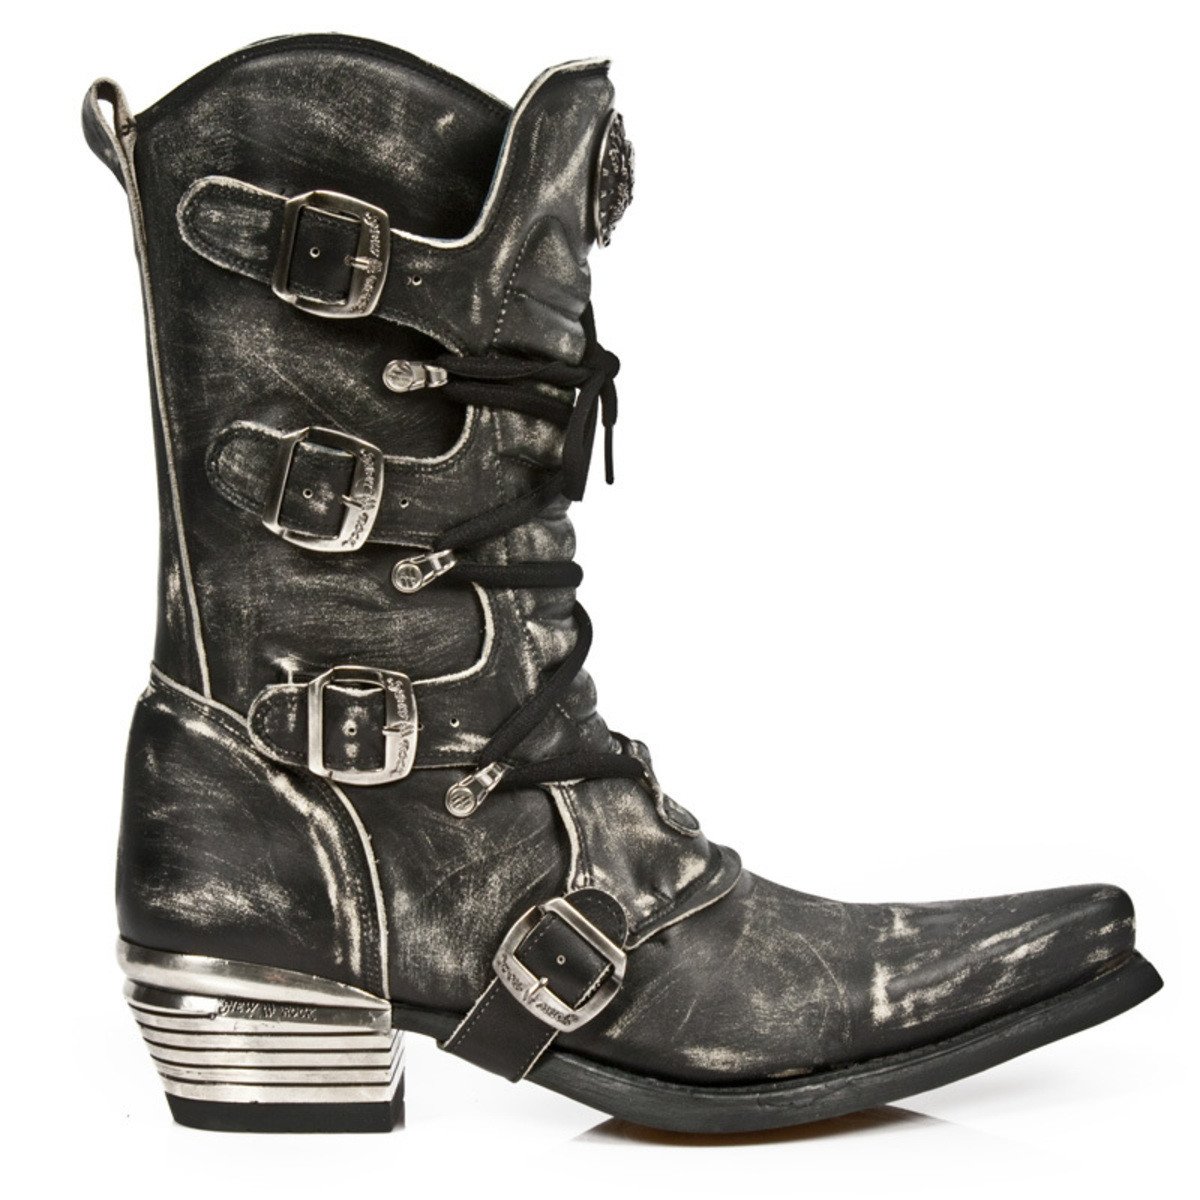 boty kožené dámské - WEST NEGRO ACERO VINTAGE RASPADO - NEW ROCK - M.7993-S3 39